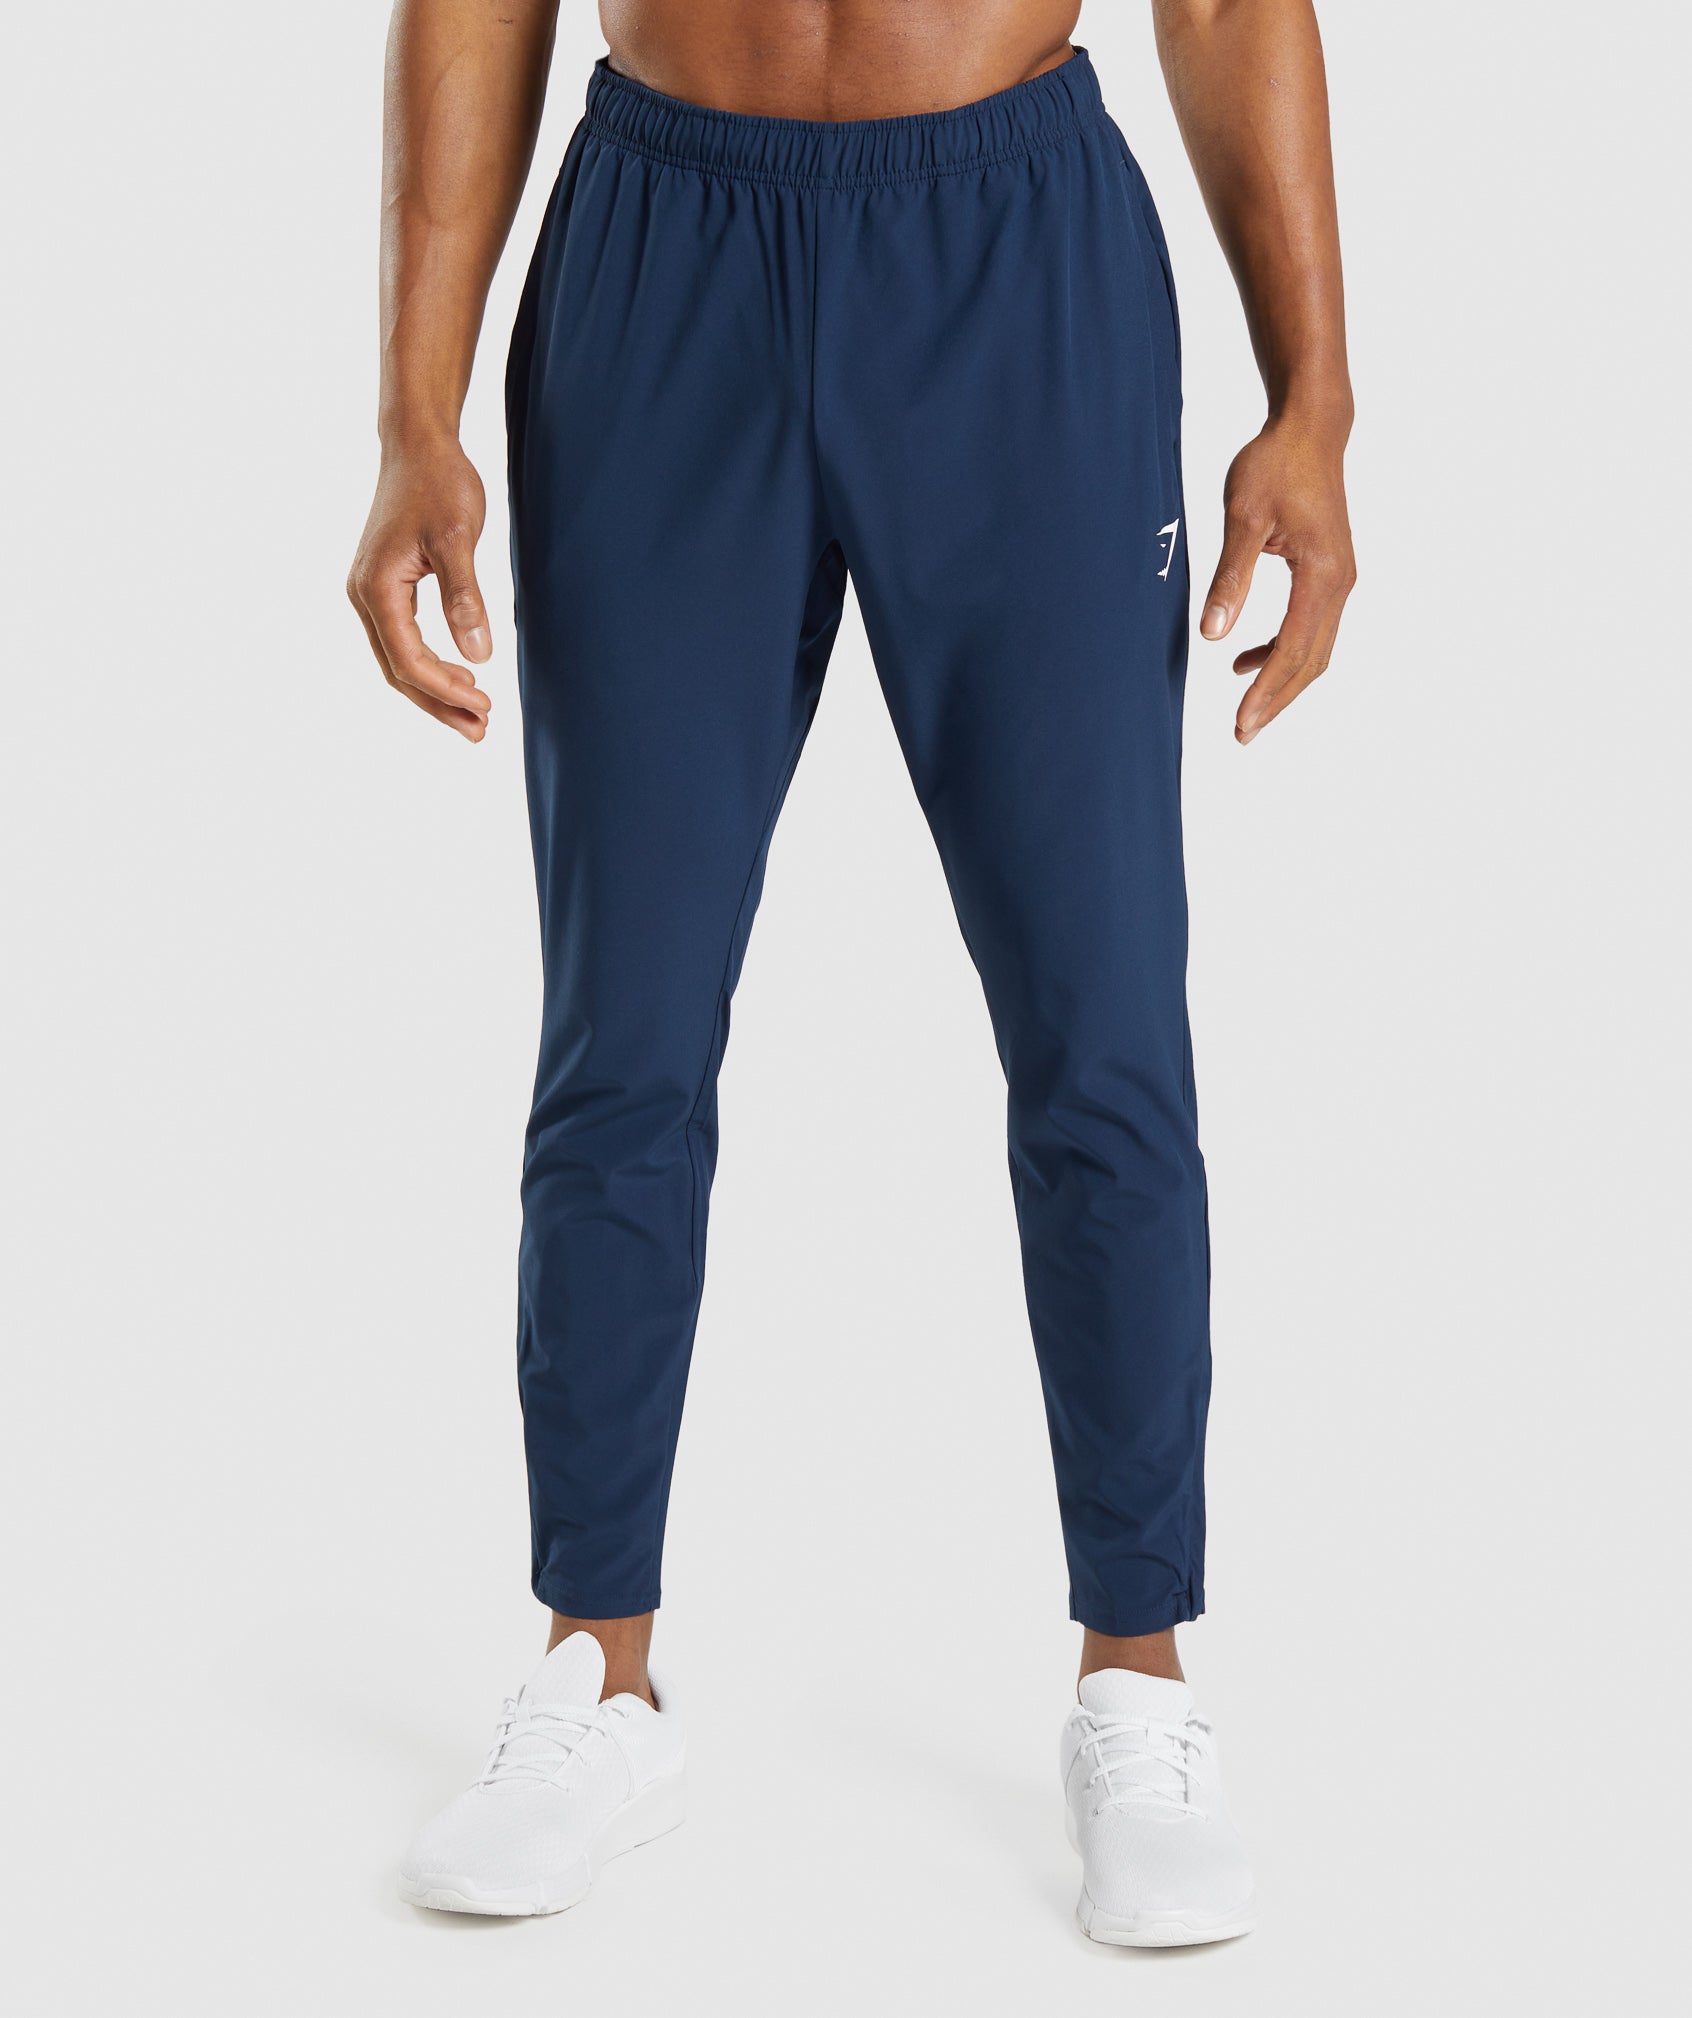 Gymshark, Pants, New Gymshark Zippered Crest Joggers Navy Blue Large